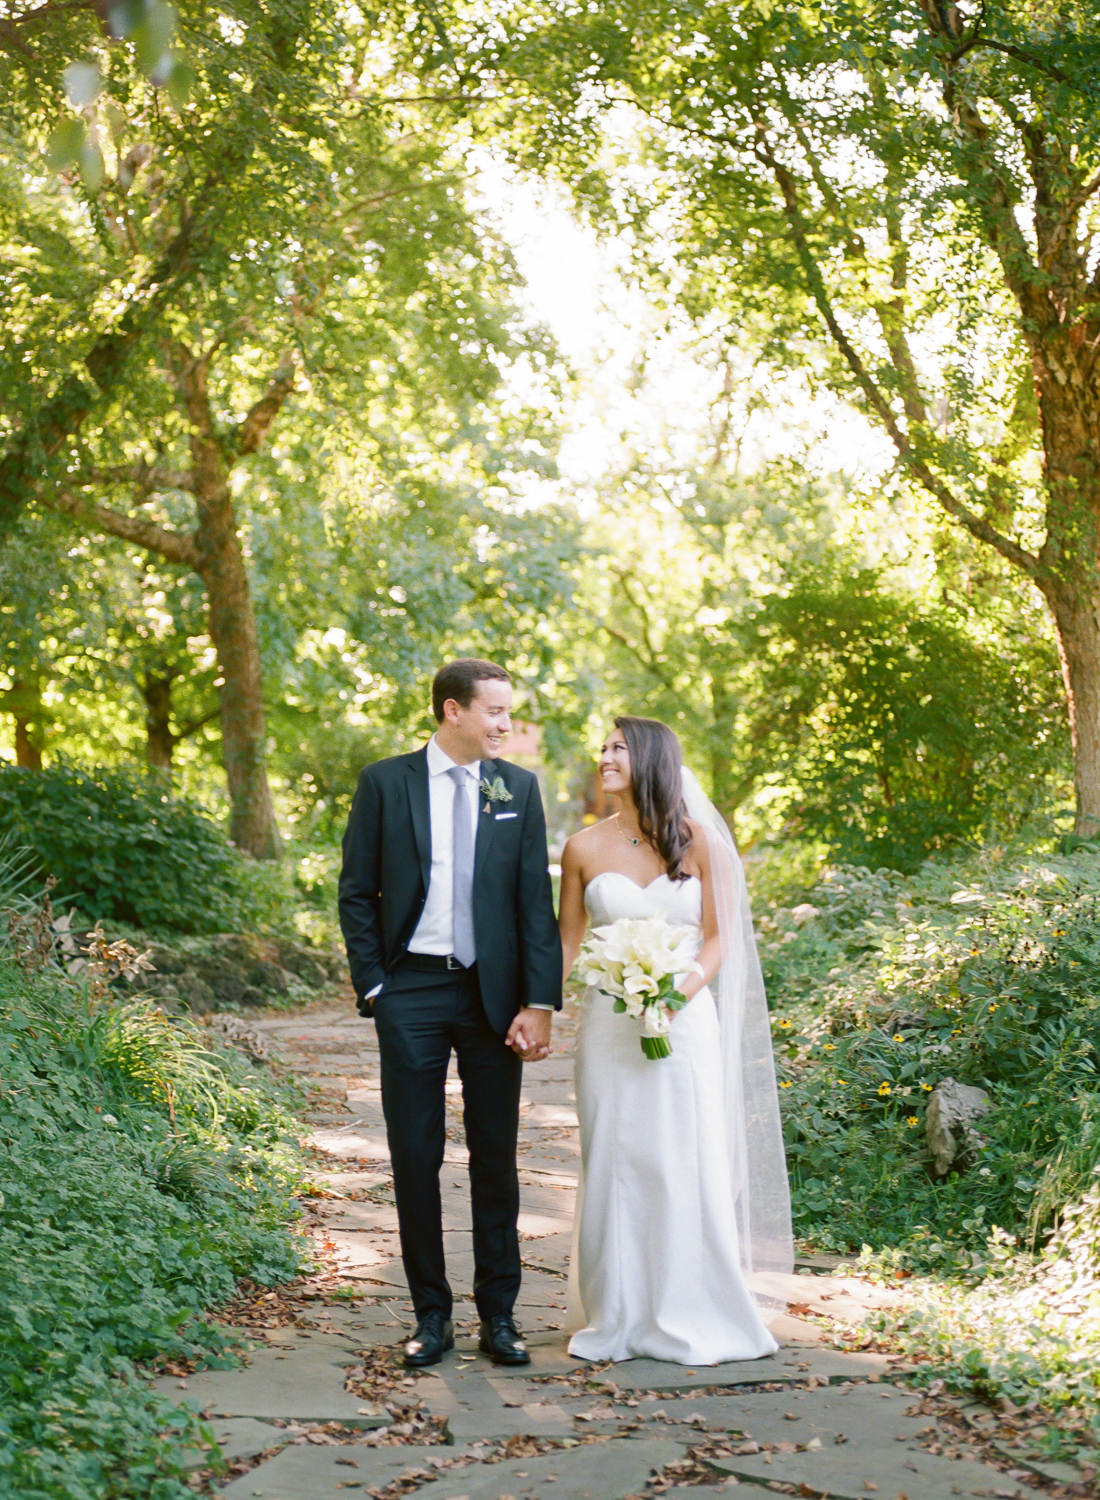 Bride and groom portrait in sunlight on Lafayette Park path; St. Louis fine art film wedding photographer Erica Robnett Photography